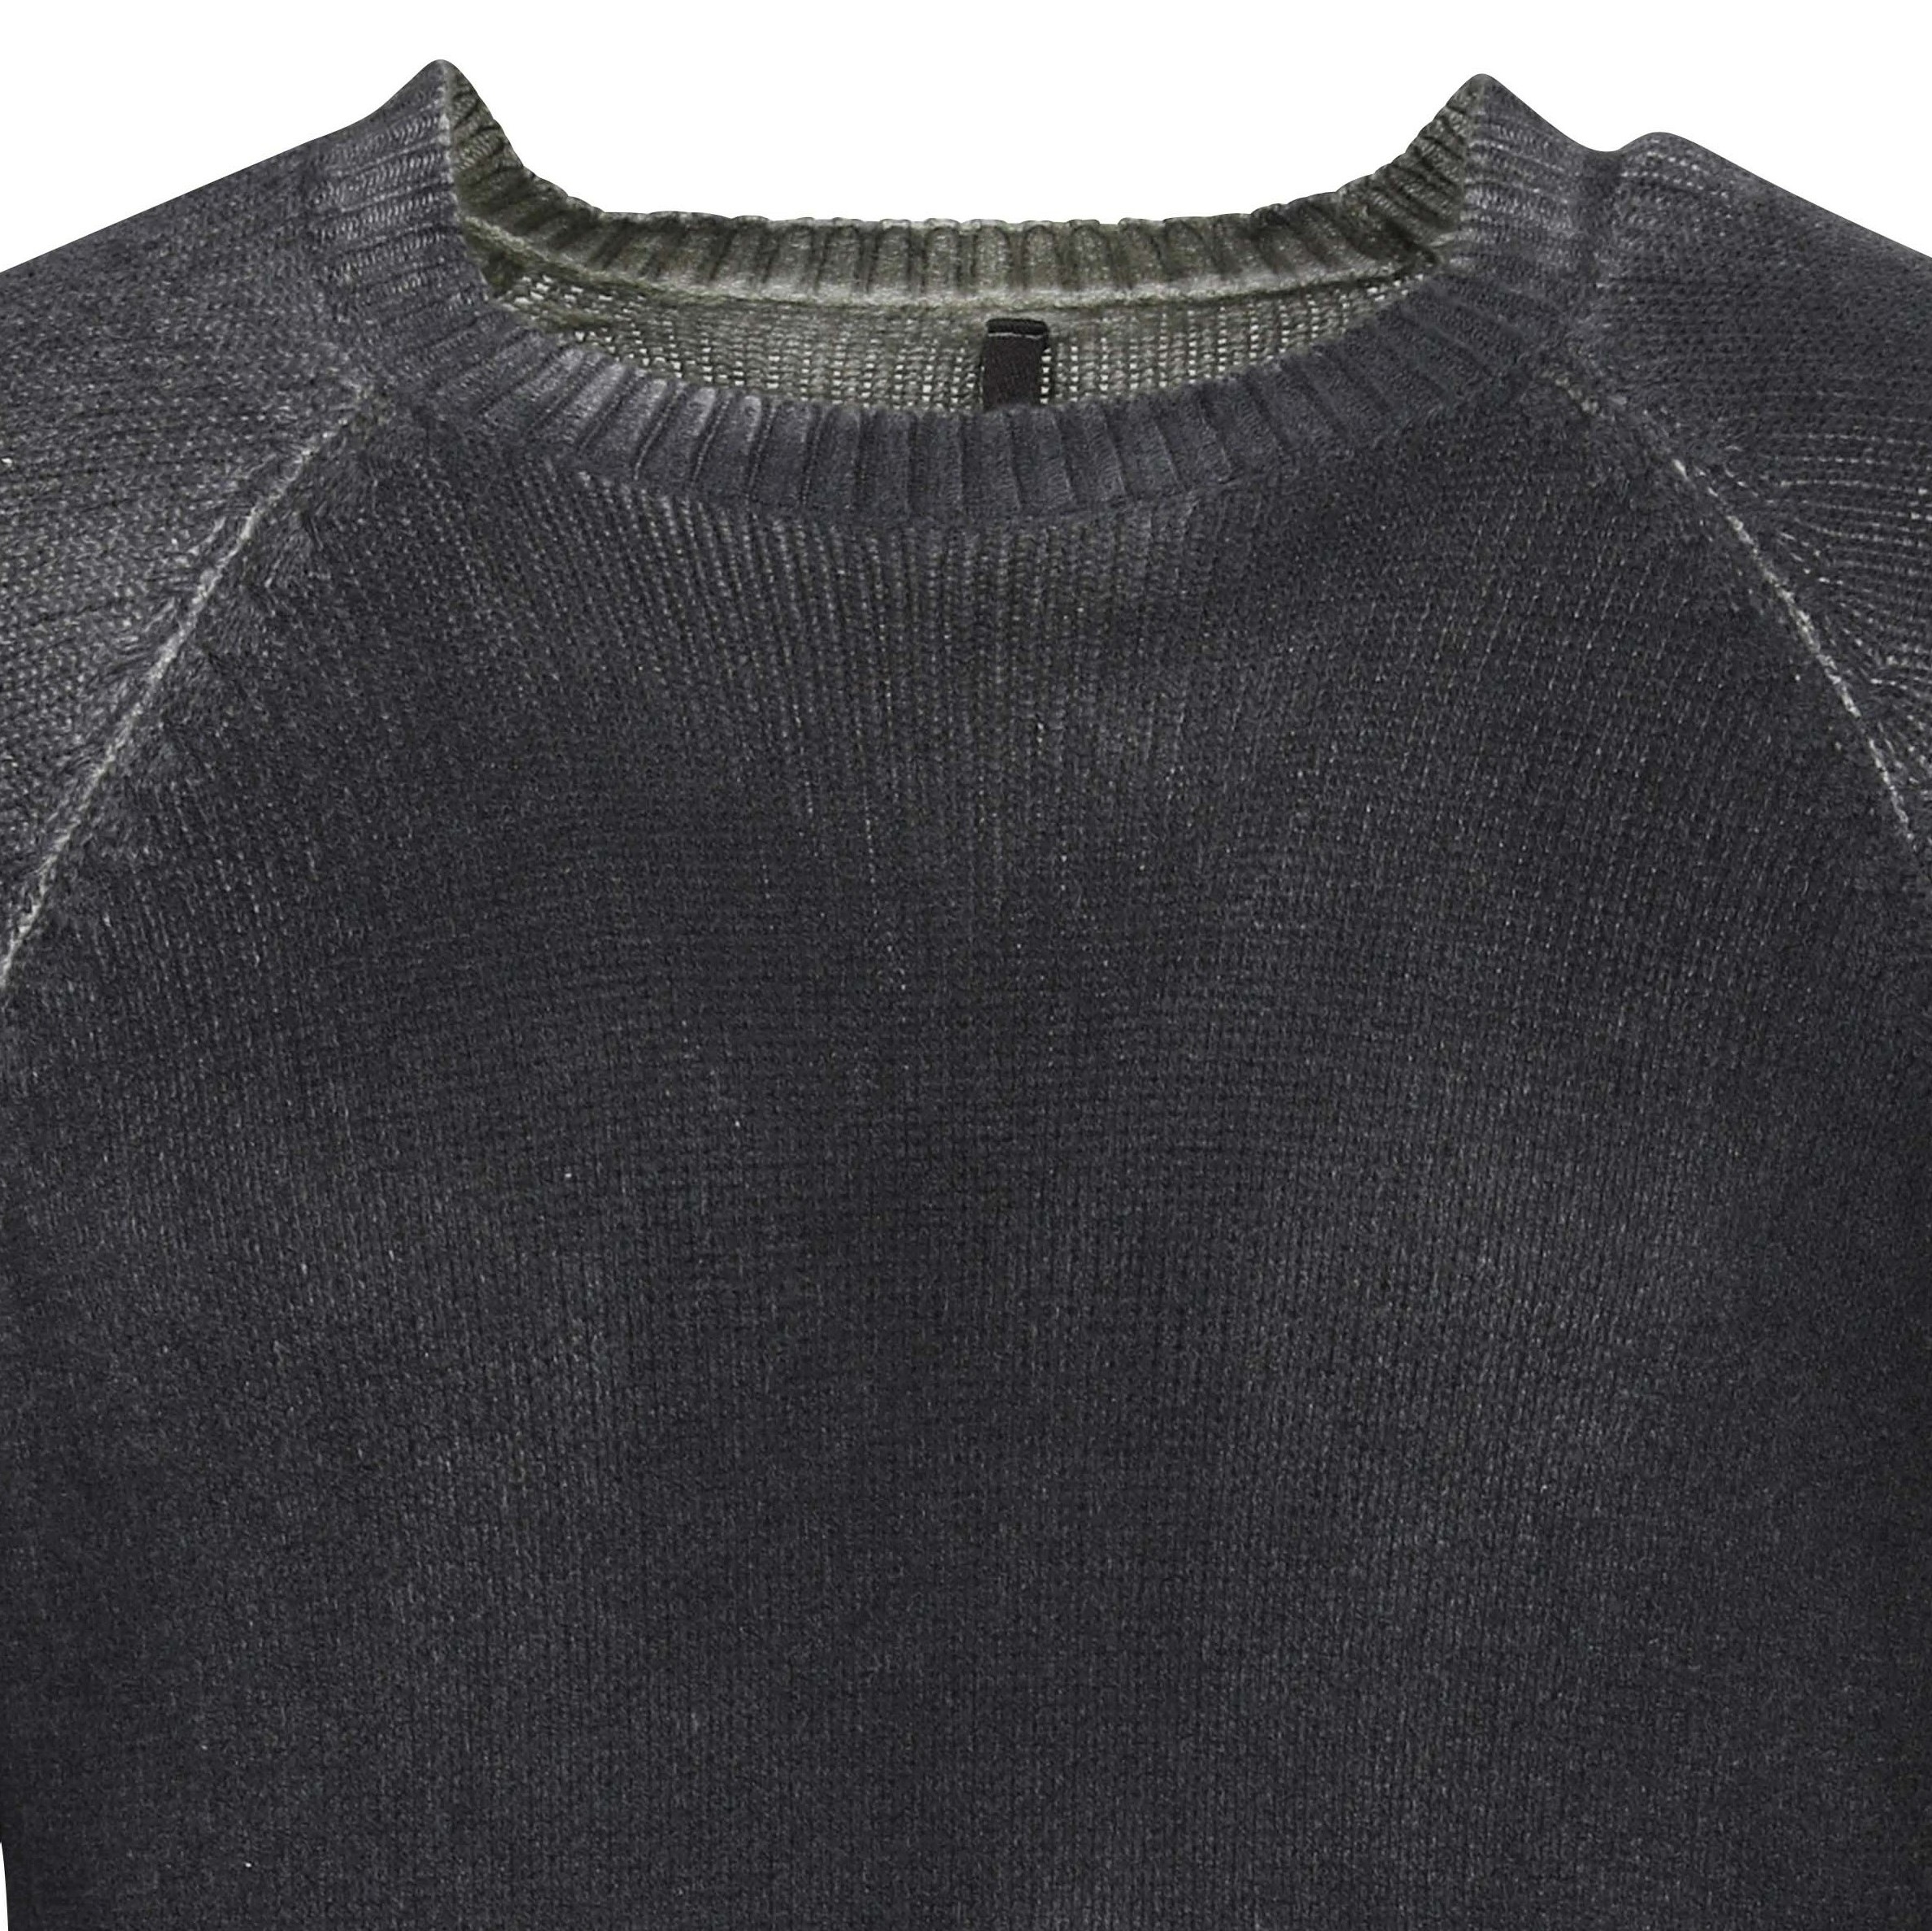 Transit Uomo Knit Pullover in Washed Dark Grey